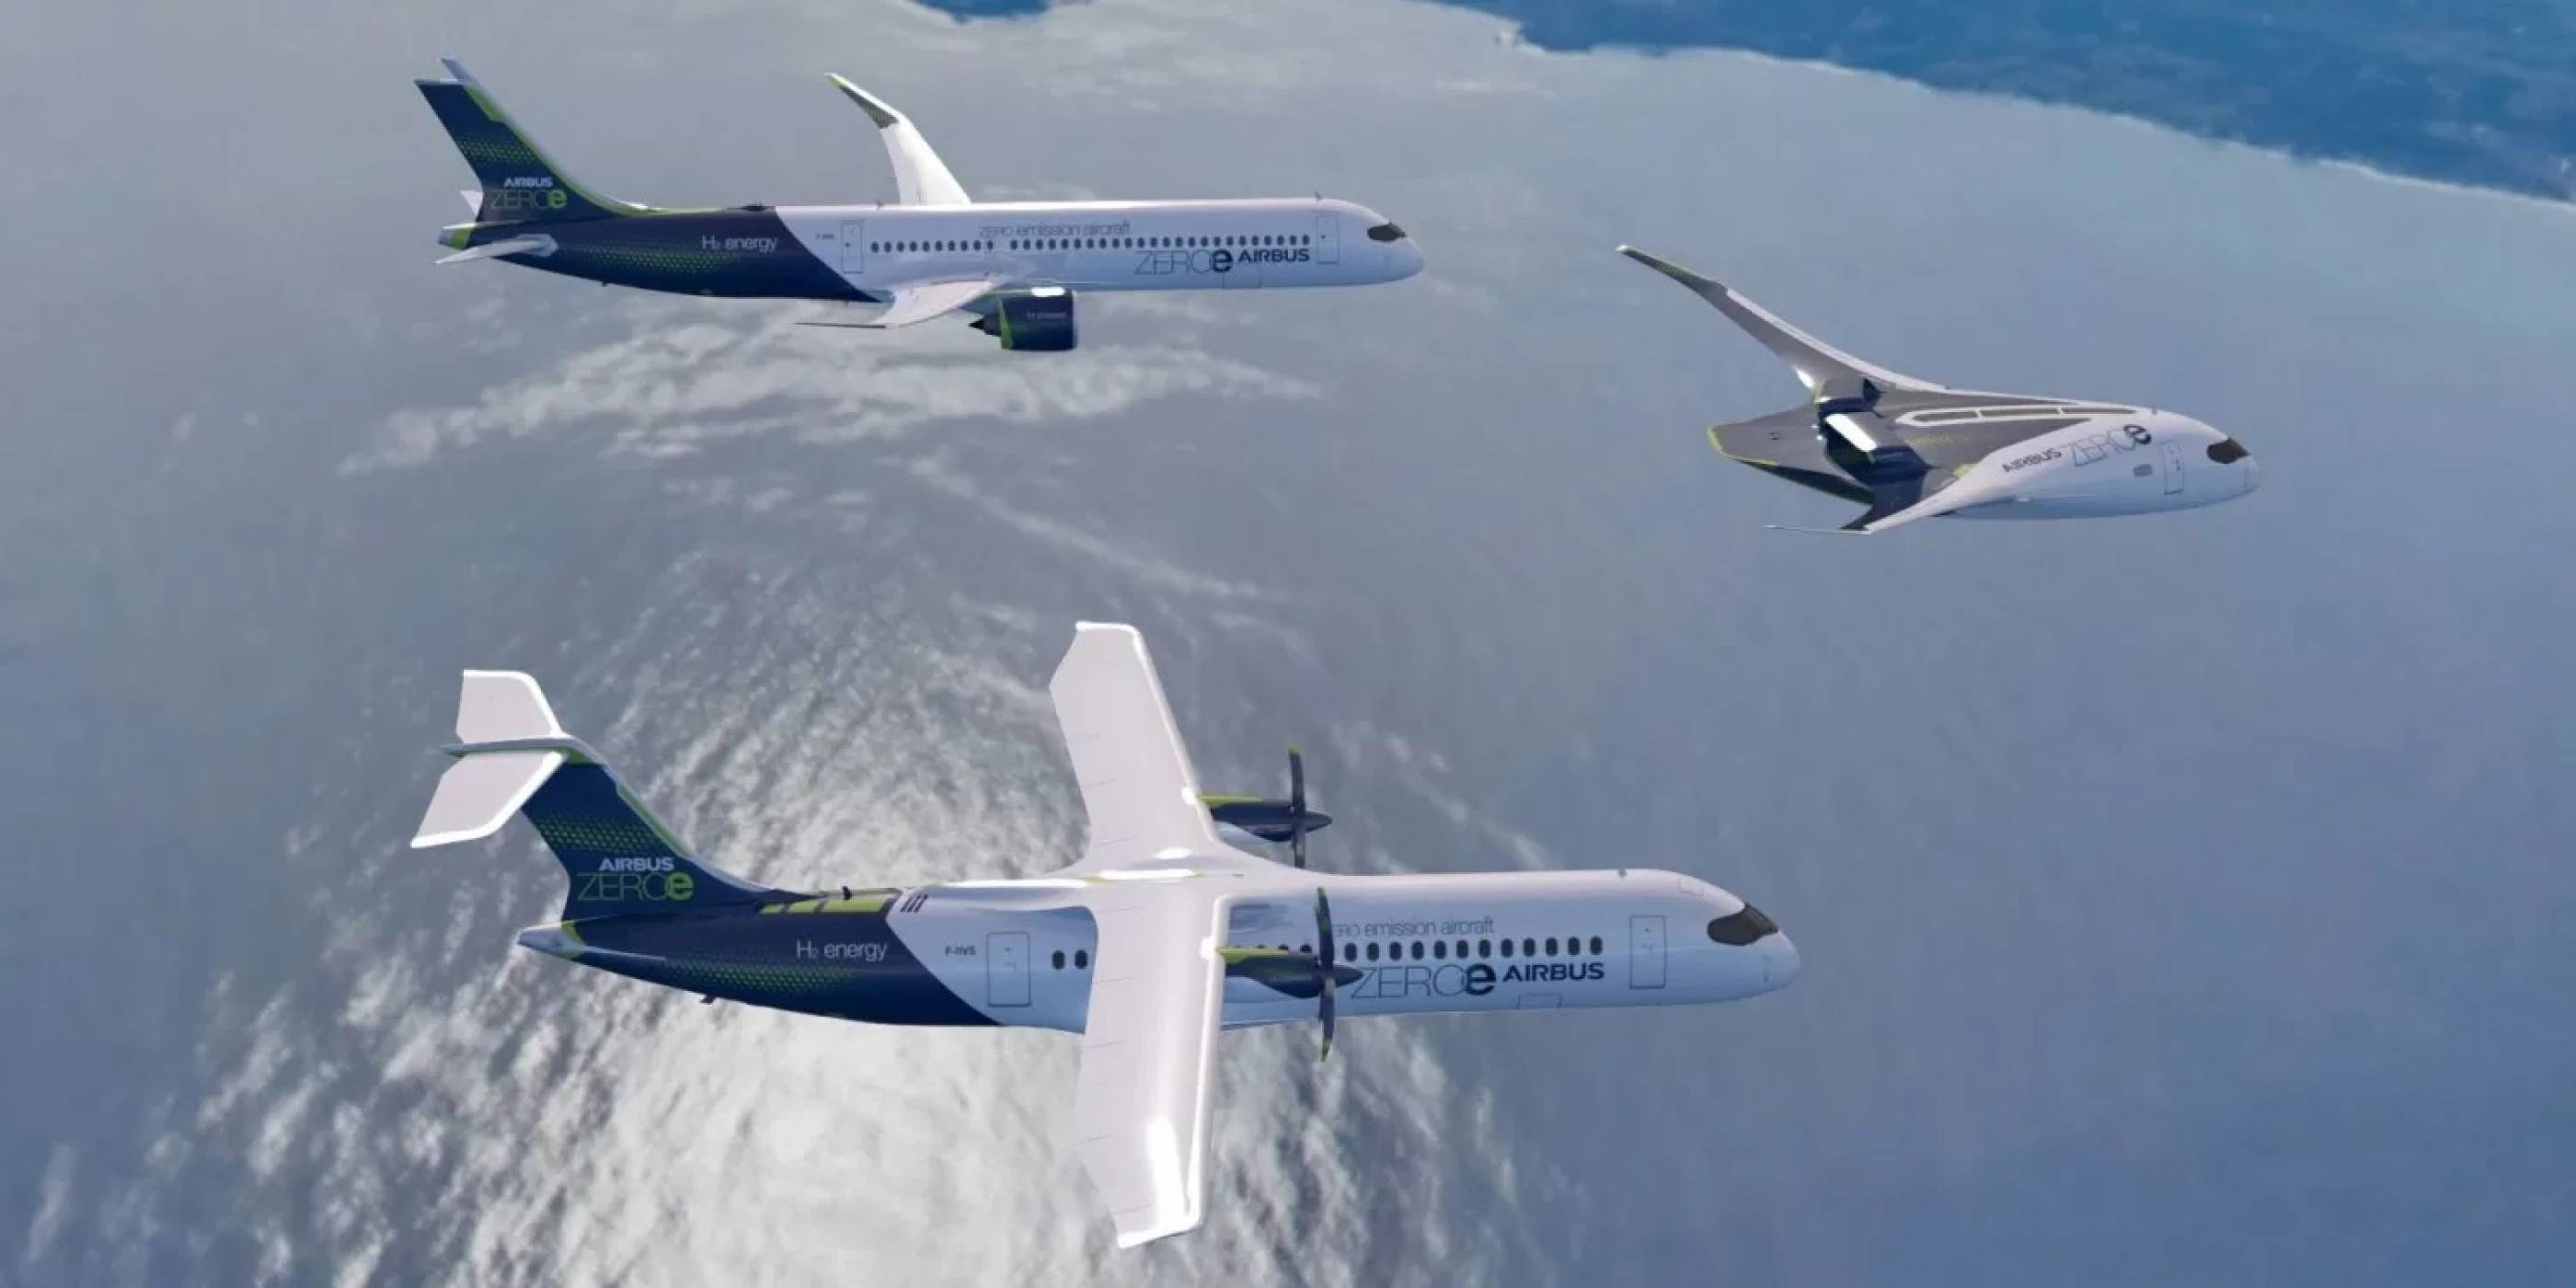  Този самолет на водородно гориво от Airbus може да ви вози през 2035 г. (ВИДЕО)